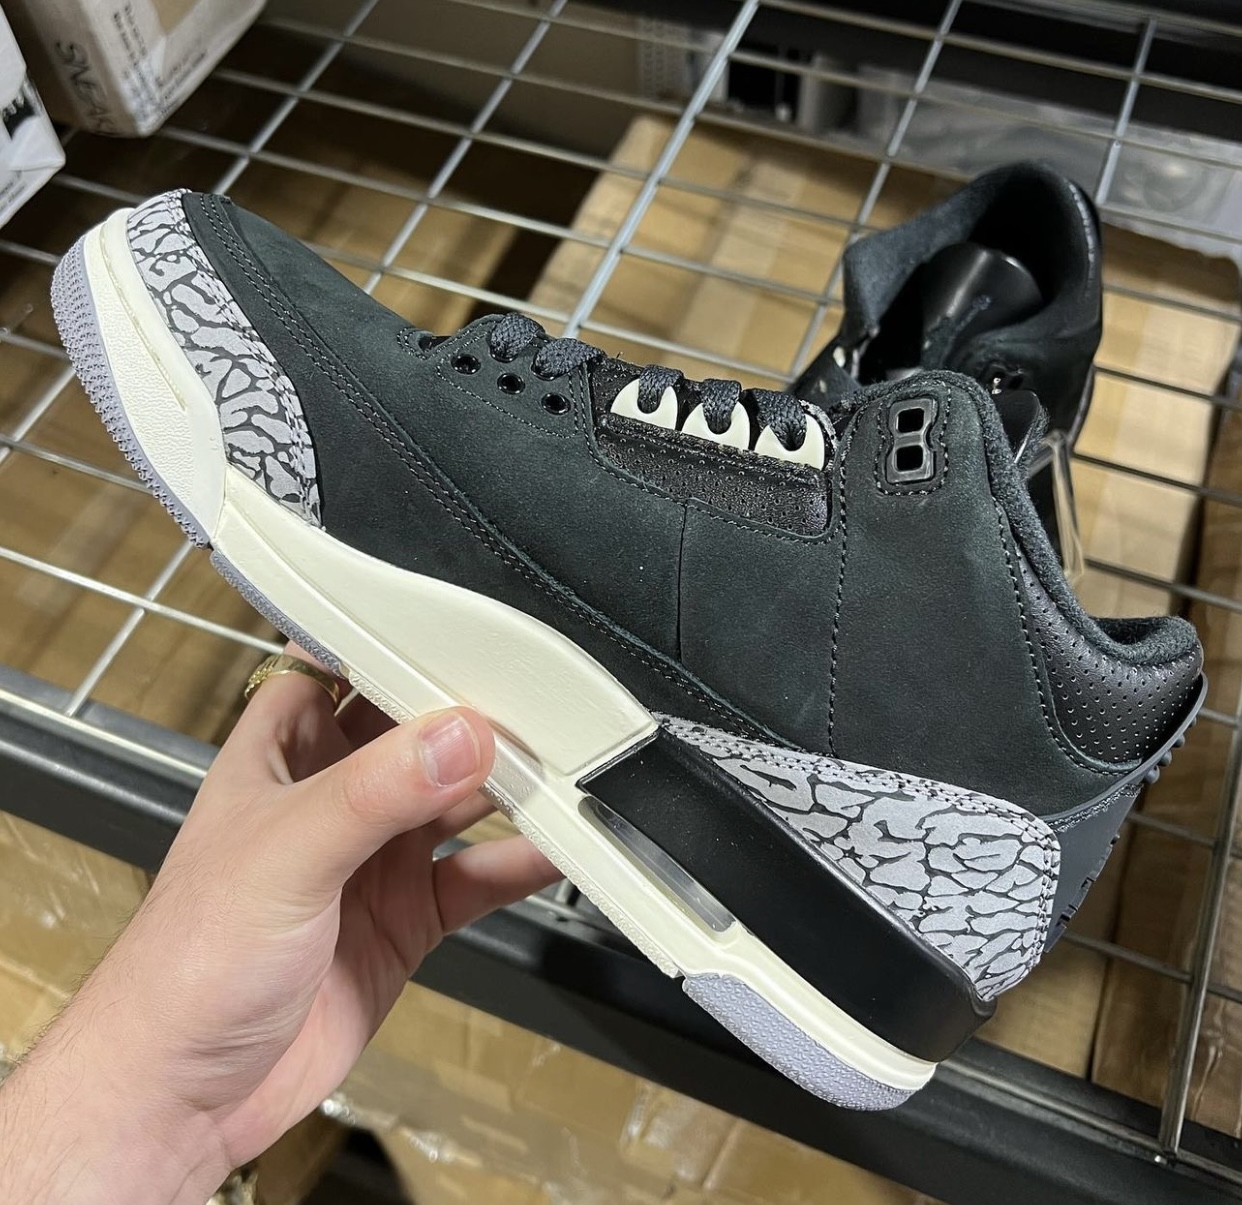 Nike Jordan - Cagoule unisexe multi-usages - Noir